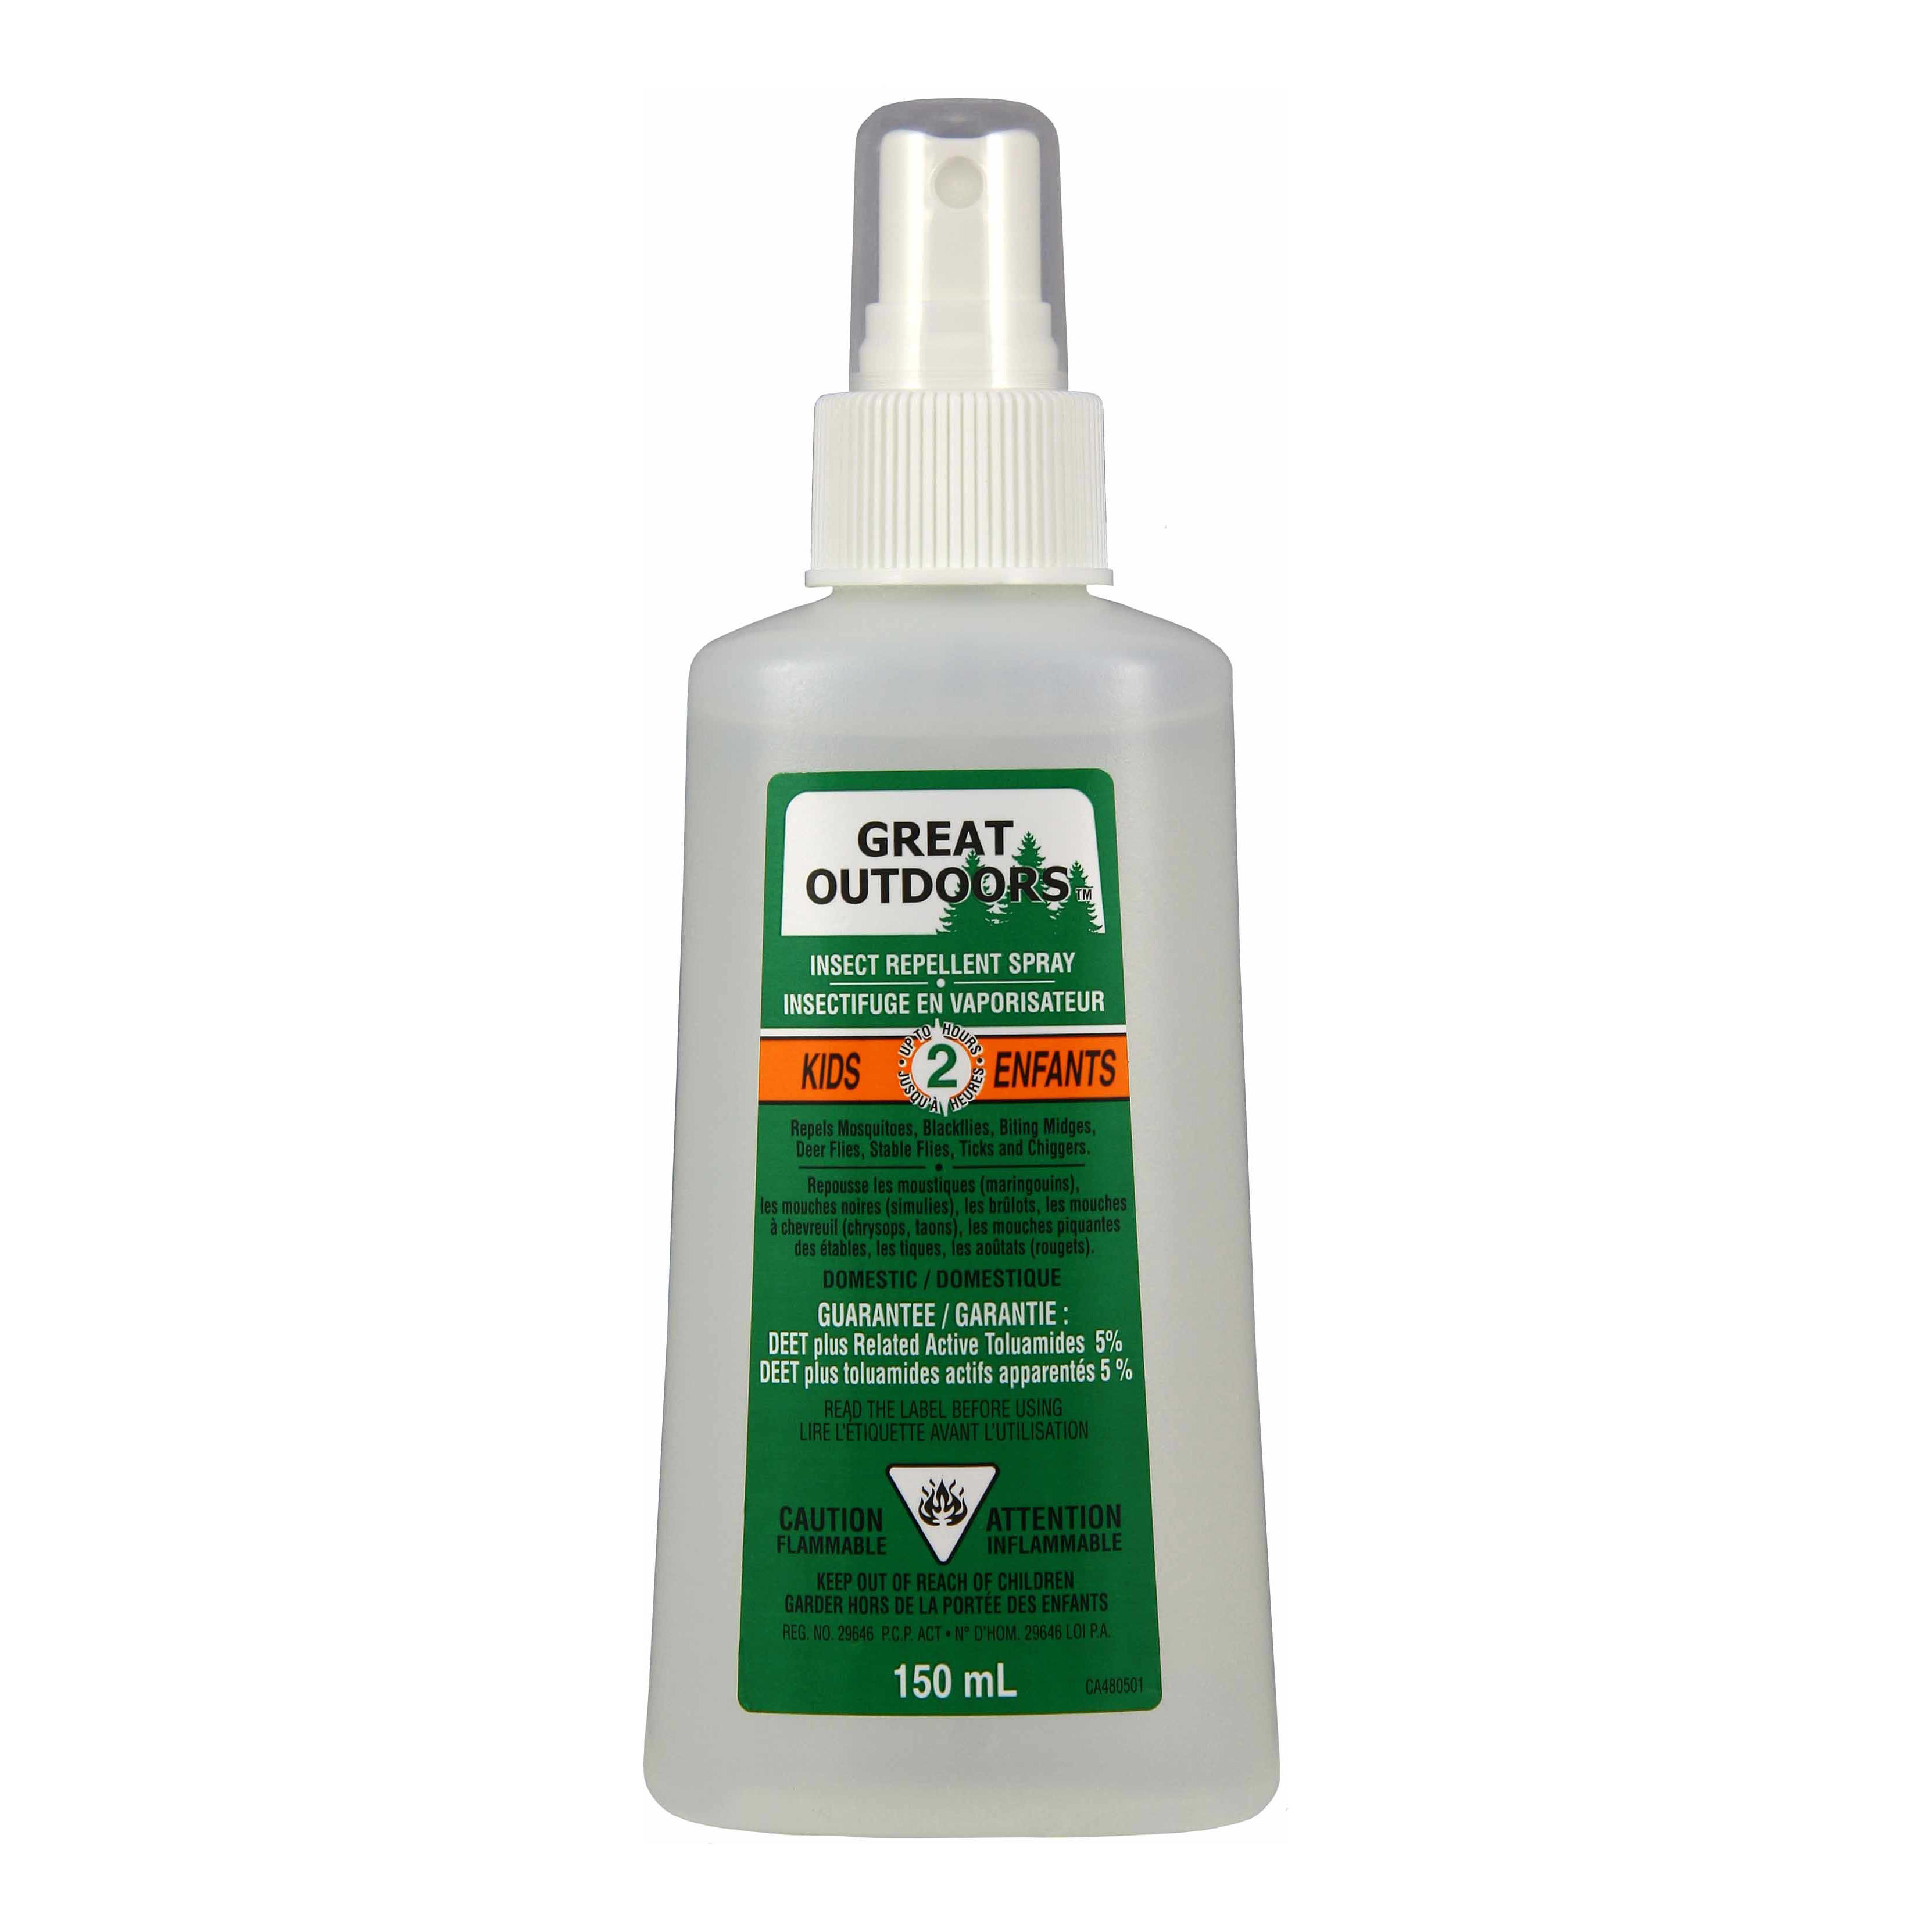 Natrapel Lemon Eucalyptus 74 ml Pump Spray, Plant-Based Insect Repellent 